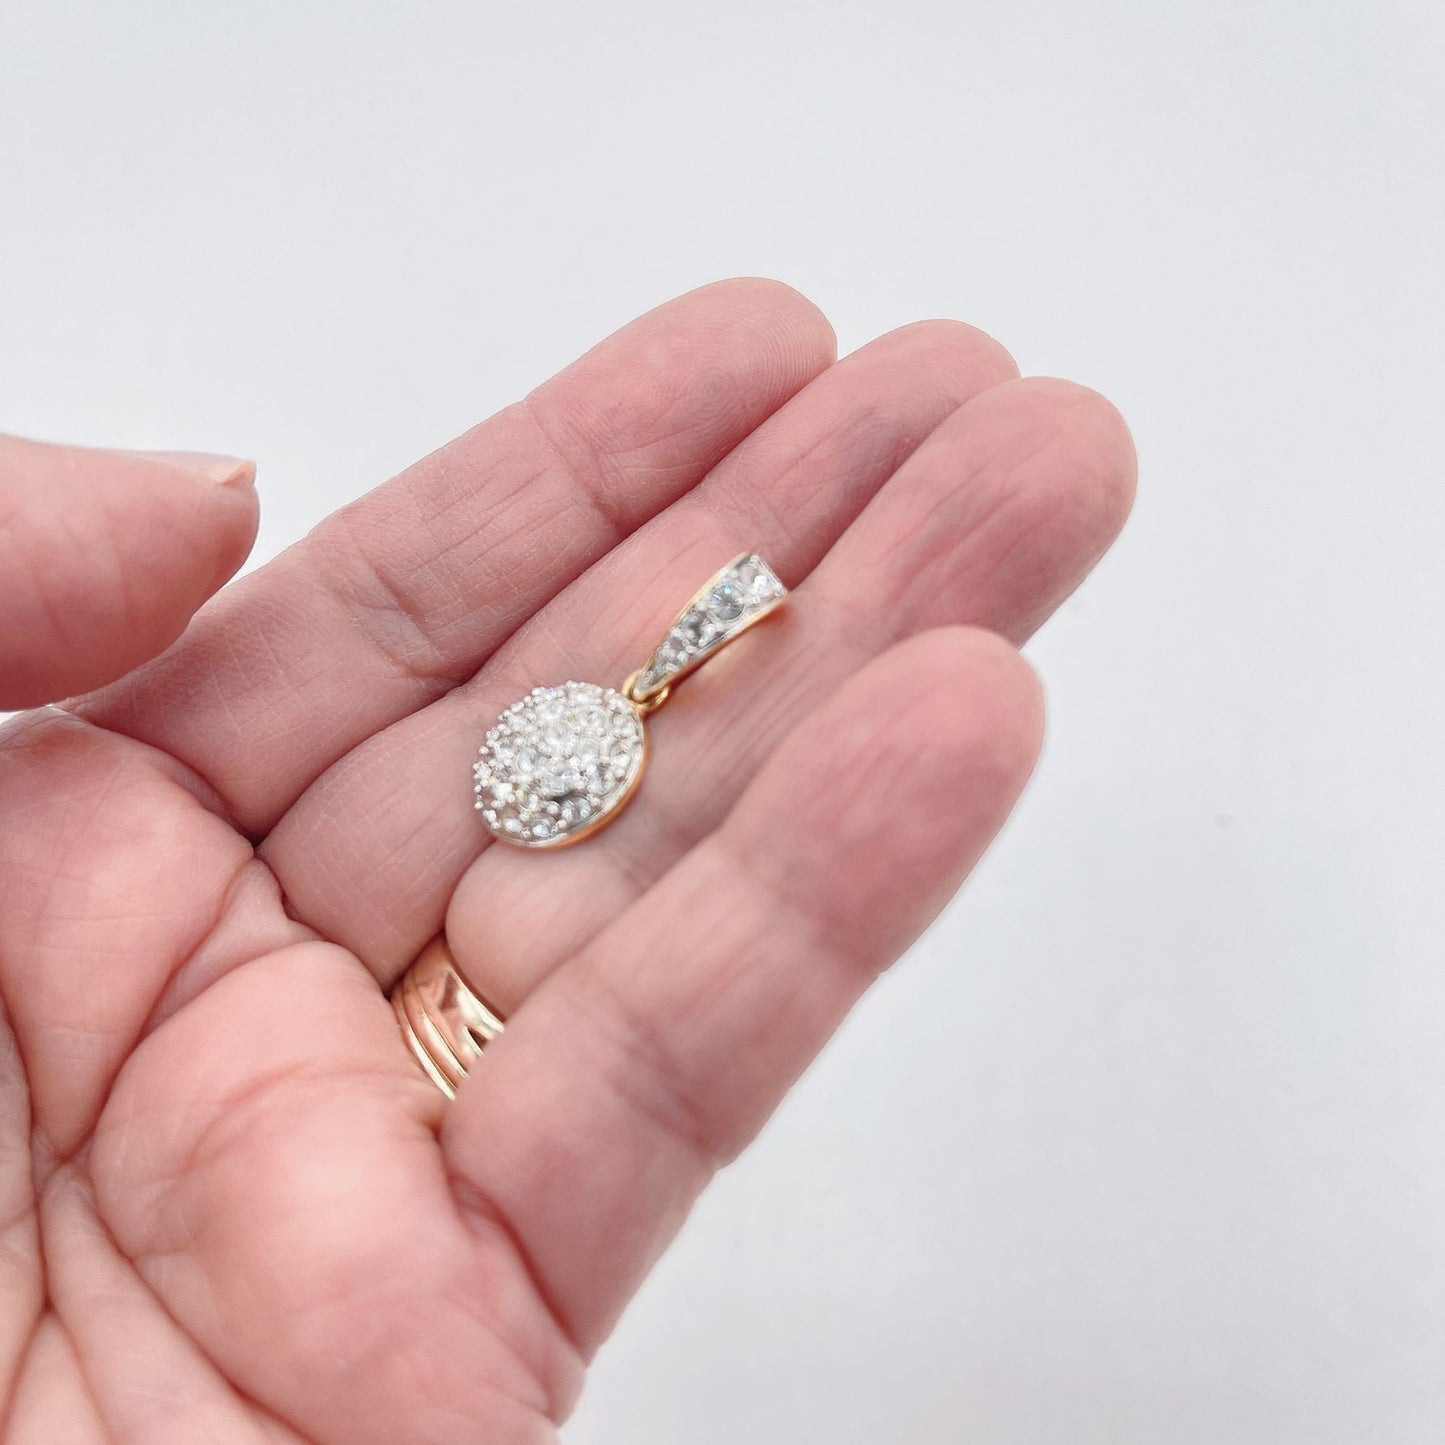 Swarovski Crystals Round Gold Pendant Small